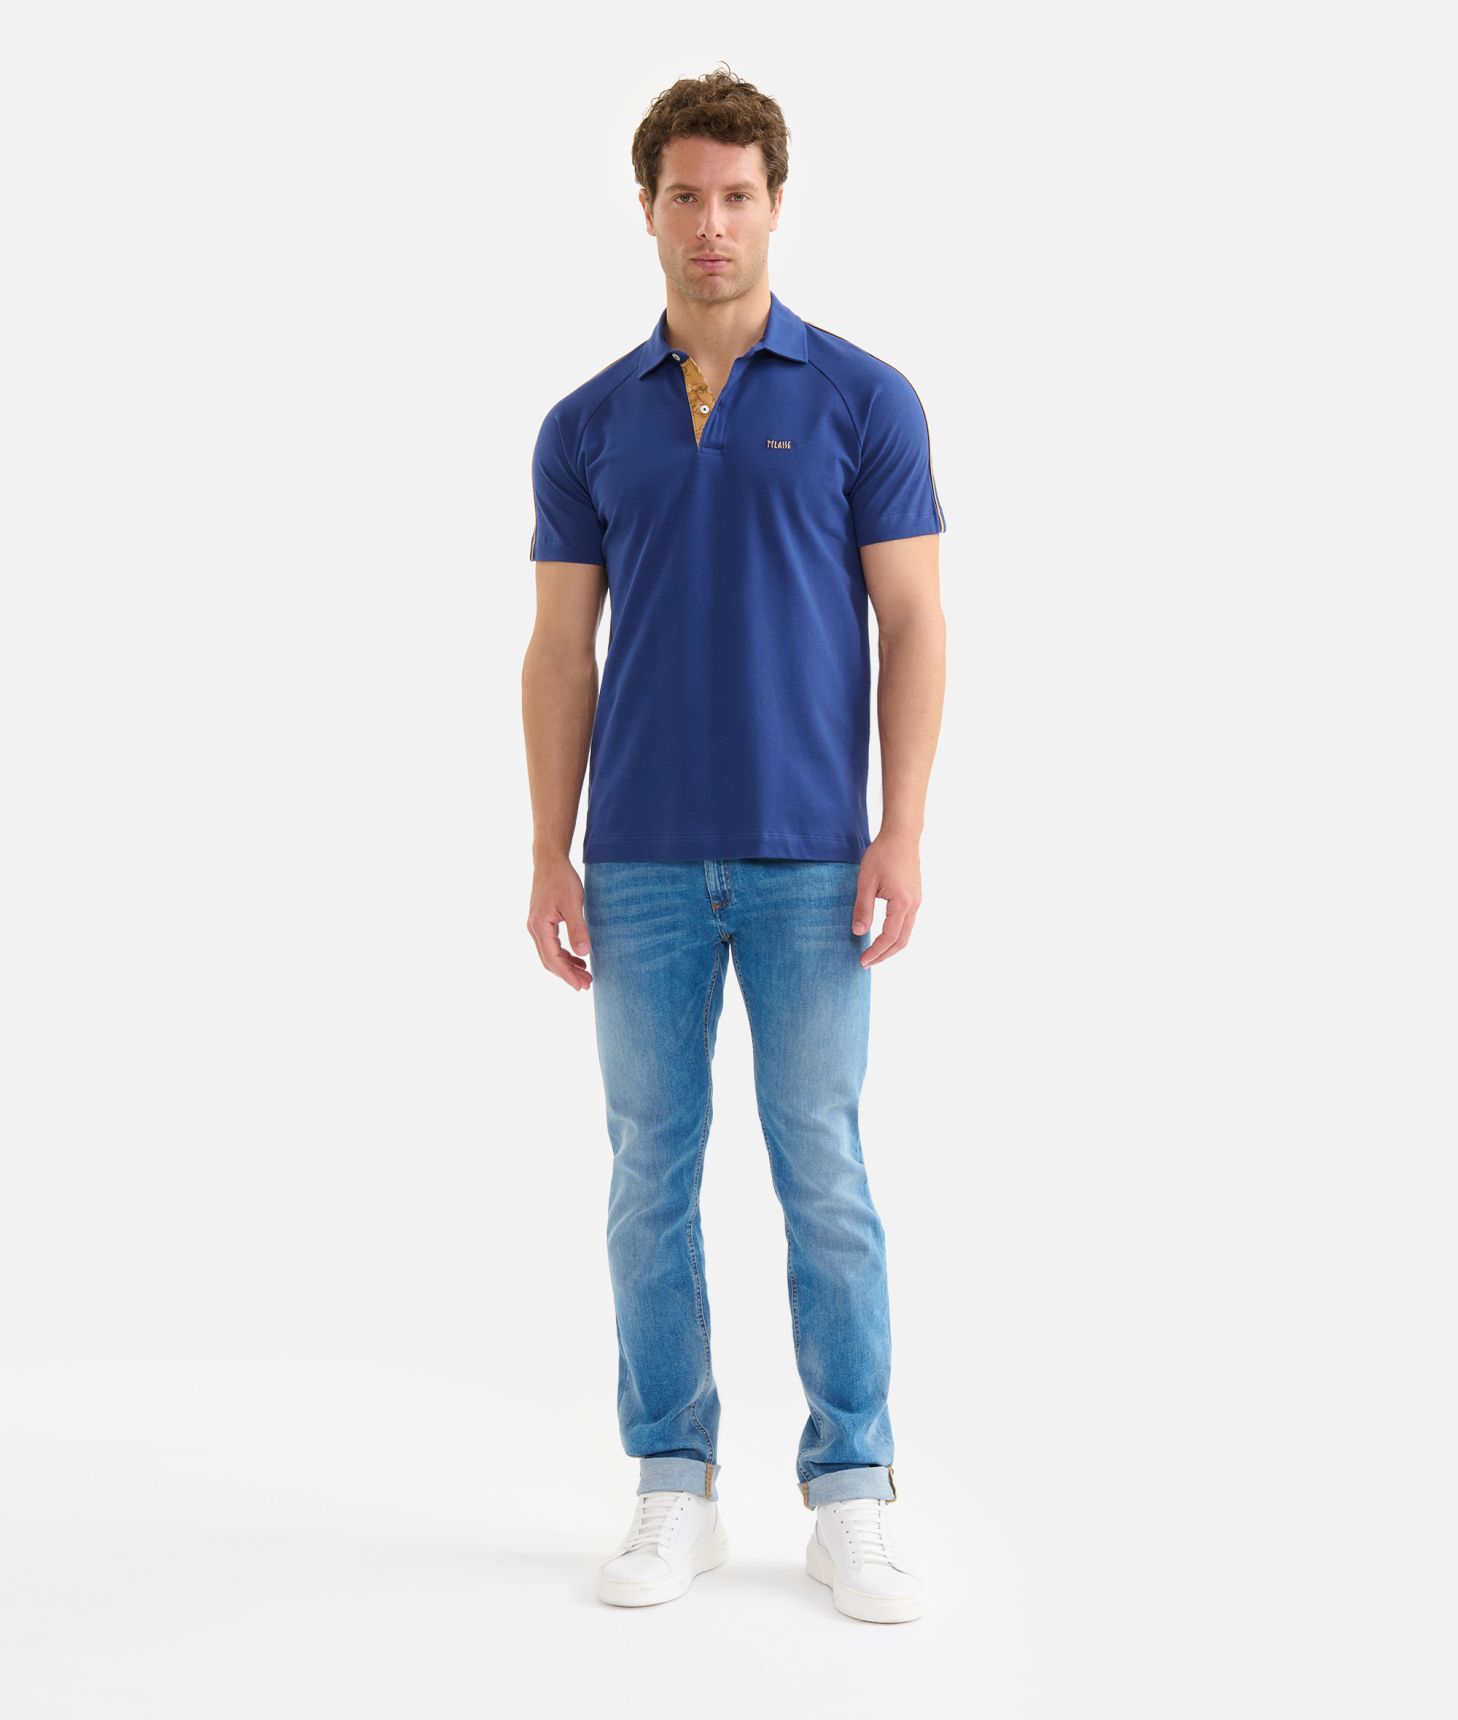 Piqué cotton jersey polo shirt with sleeve detail Cobalt Blue,front